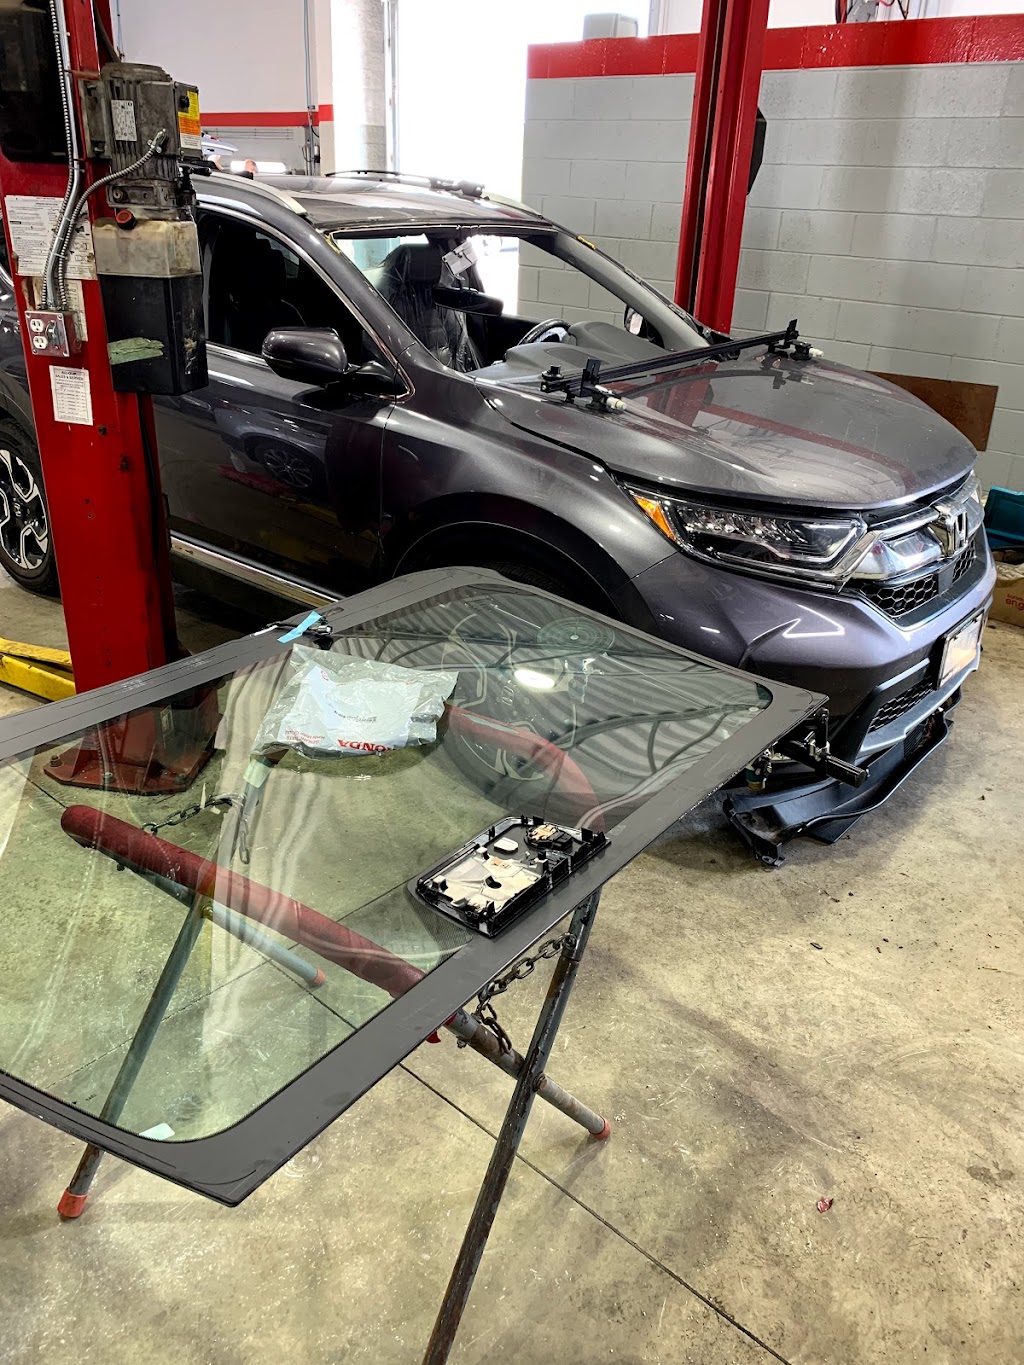 Glass One North Autoglass | car repair | 130 Angeline St N, Lindsay, ON K9V 4N1, Canada | 7058799155 OR +1 705-879-9155